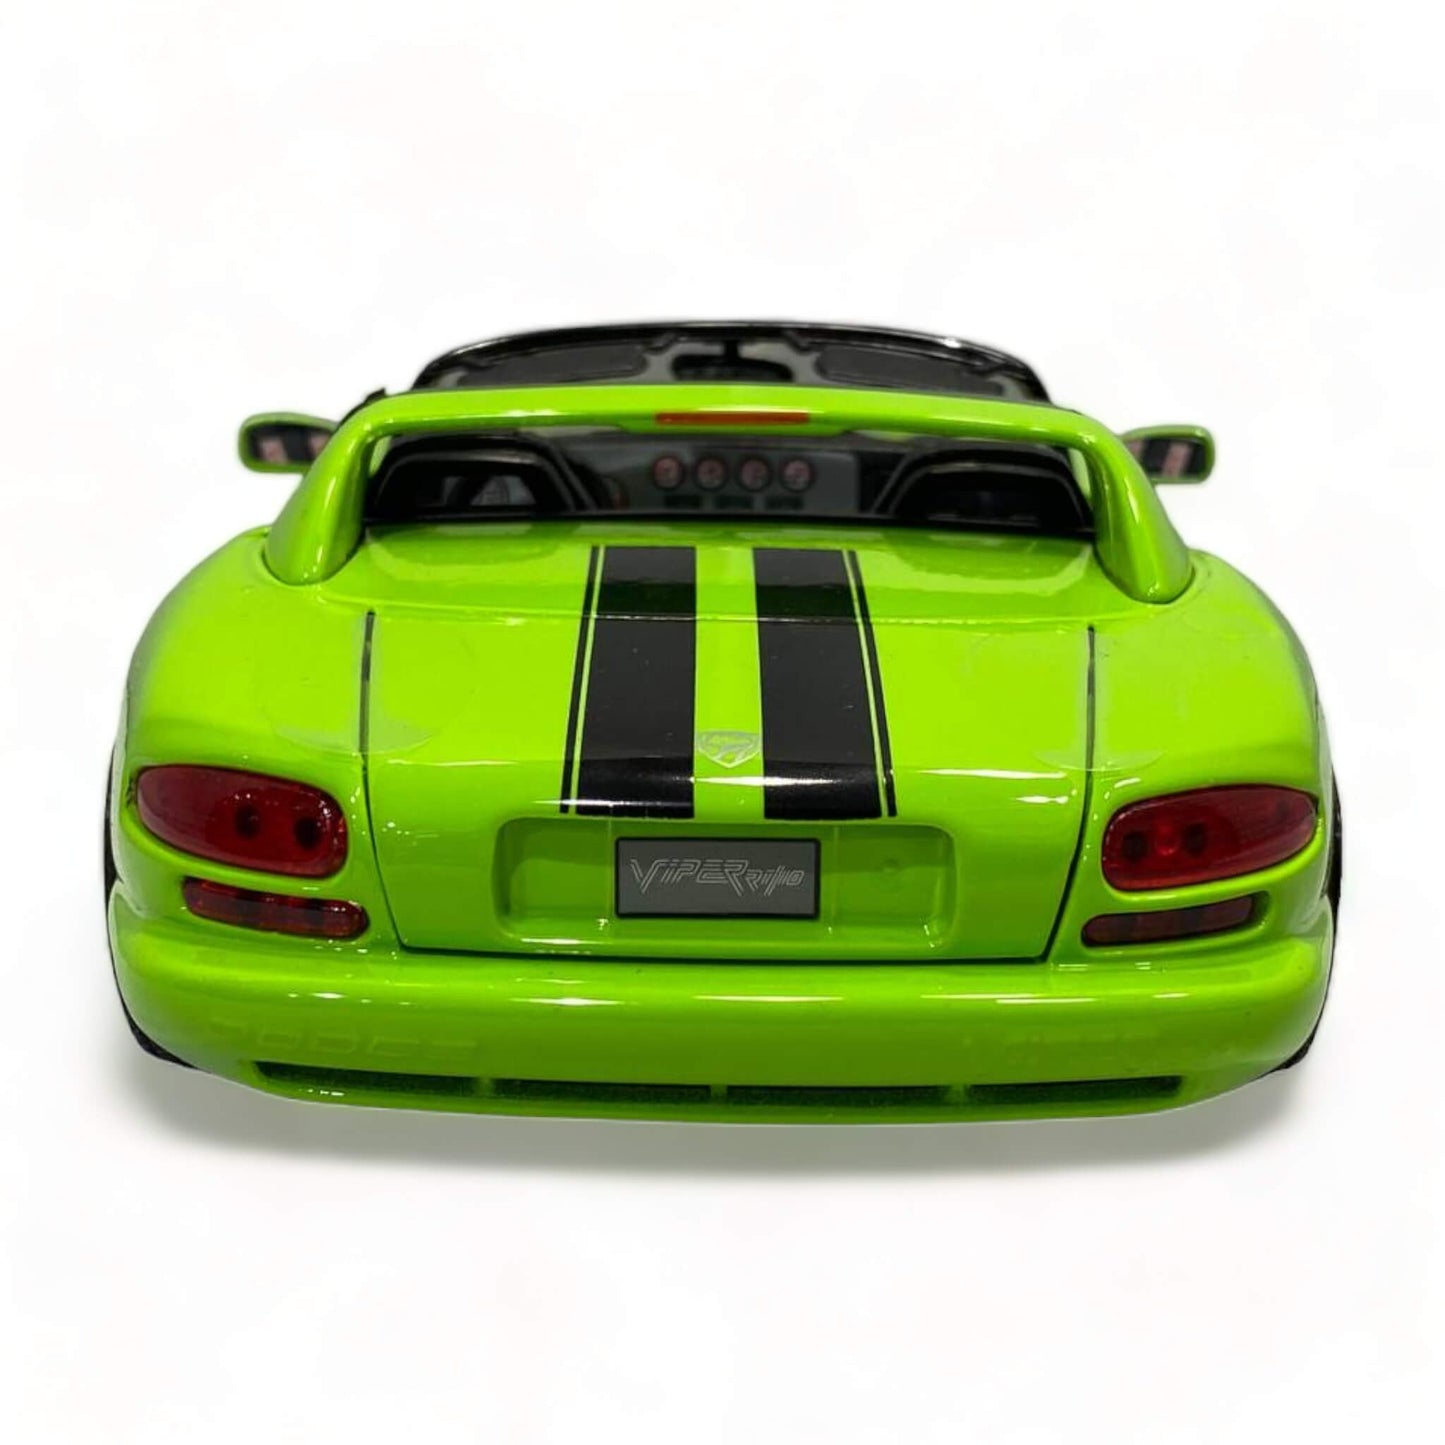 1/18 Diecast Dodge Viper RT/10 Green Scale Model Car by Maisto|Sold in Dturman.com Dubai UAE.